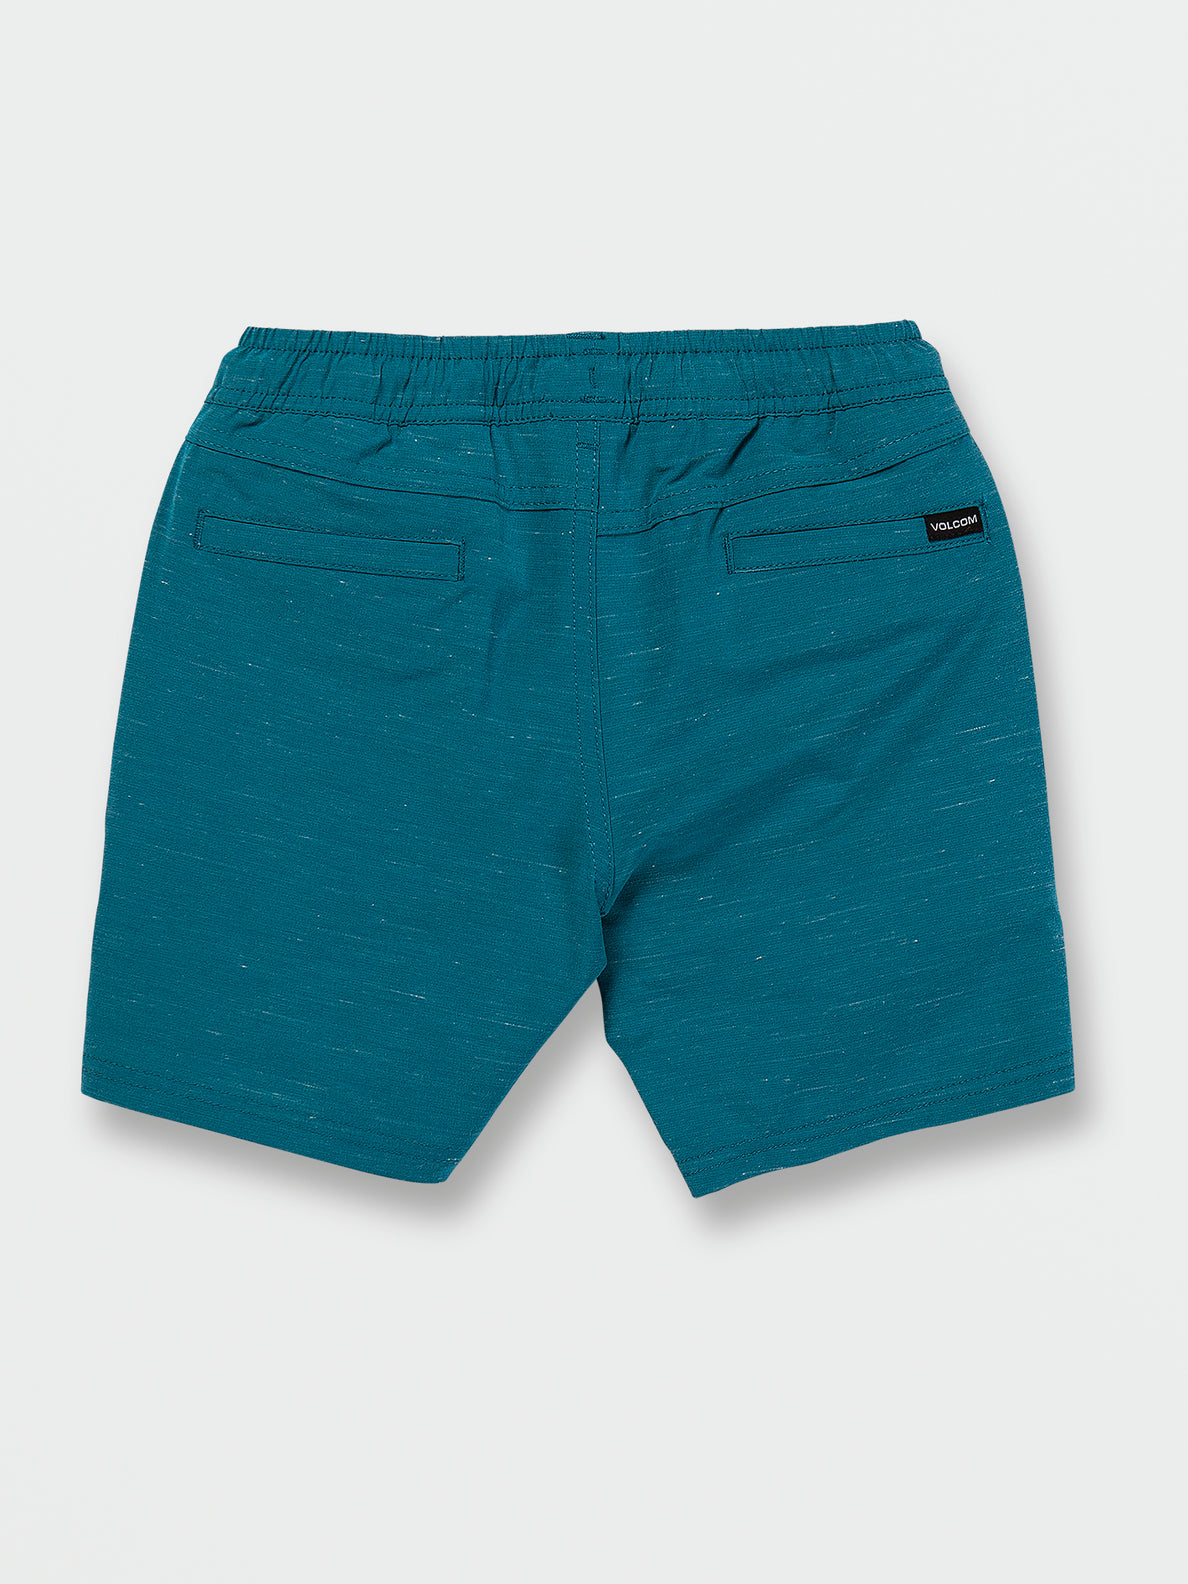 Little Boys Understoned Elastic Waist Hybrid Shorts - Ocean Teal